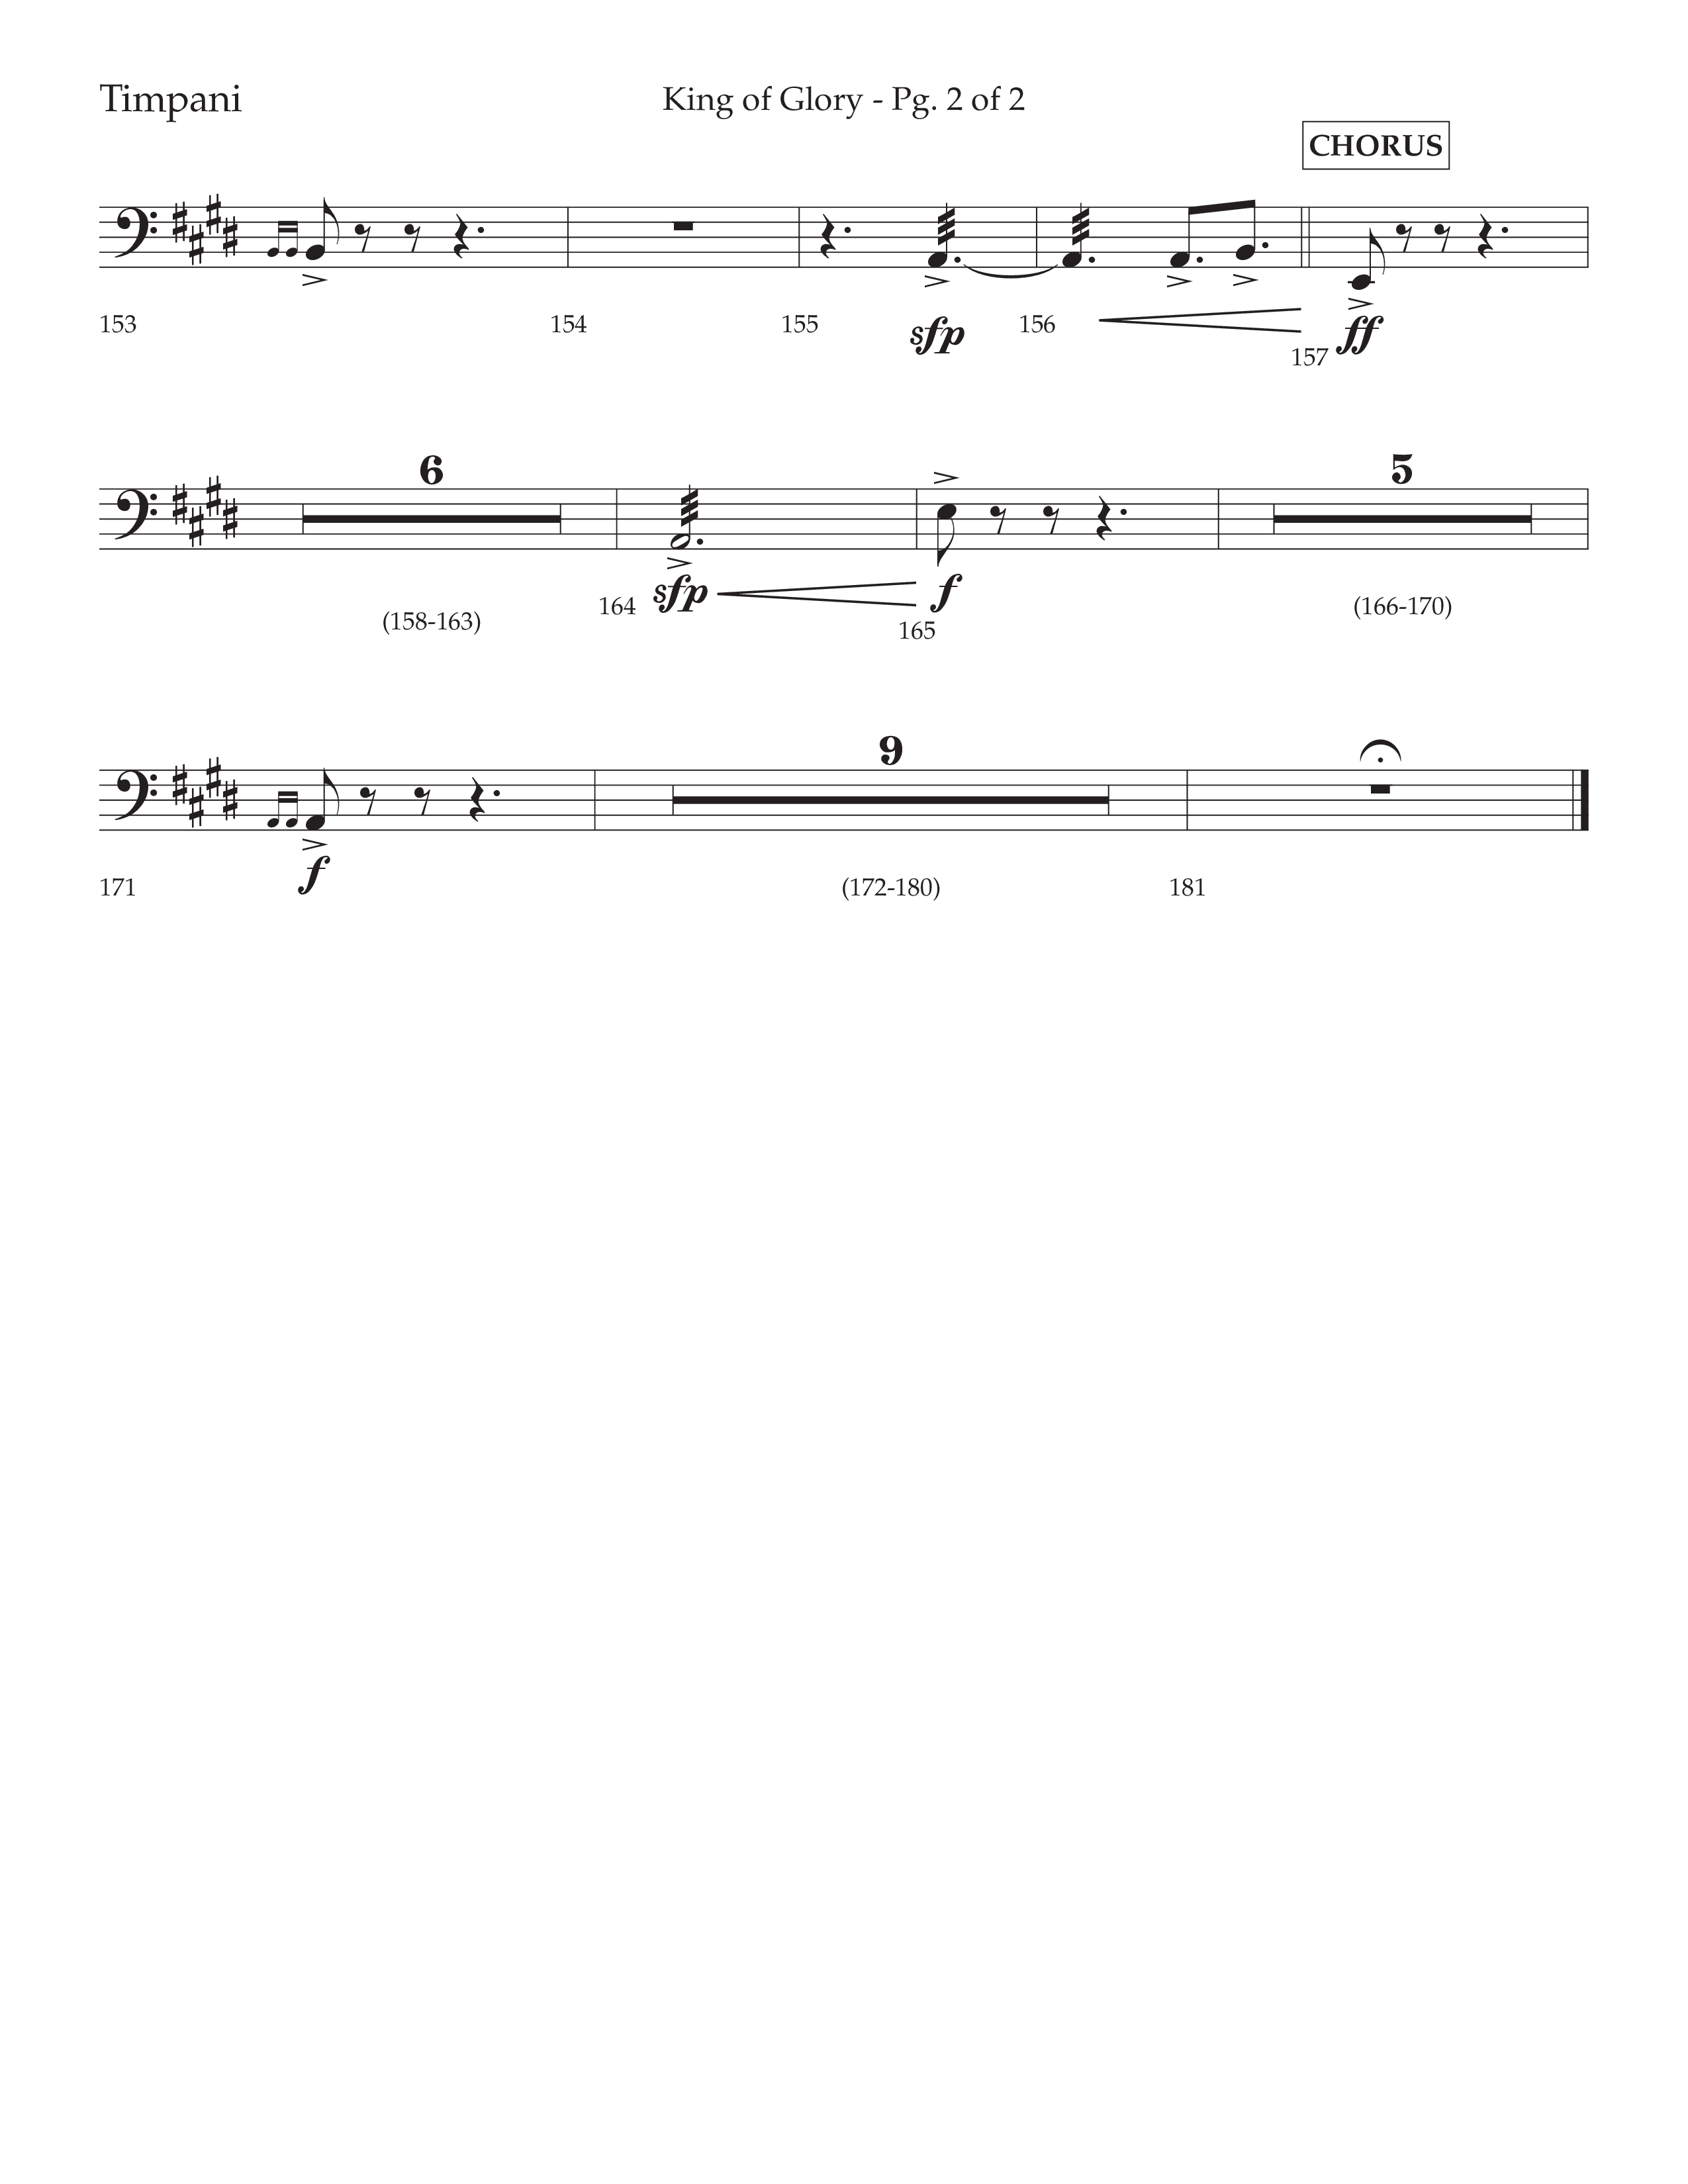 King Of Glory (Choral Anthem SATB) Timpani (Lifeway Choral / Arr. David Wise / Orch. David Shipps)